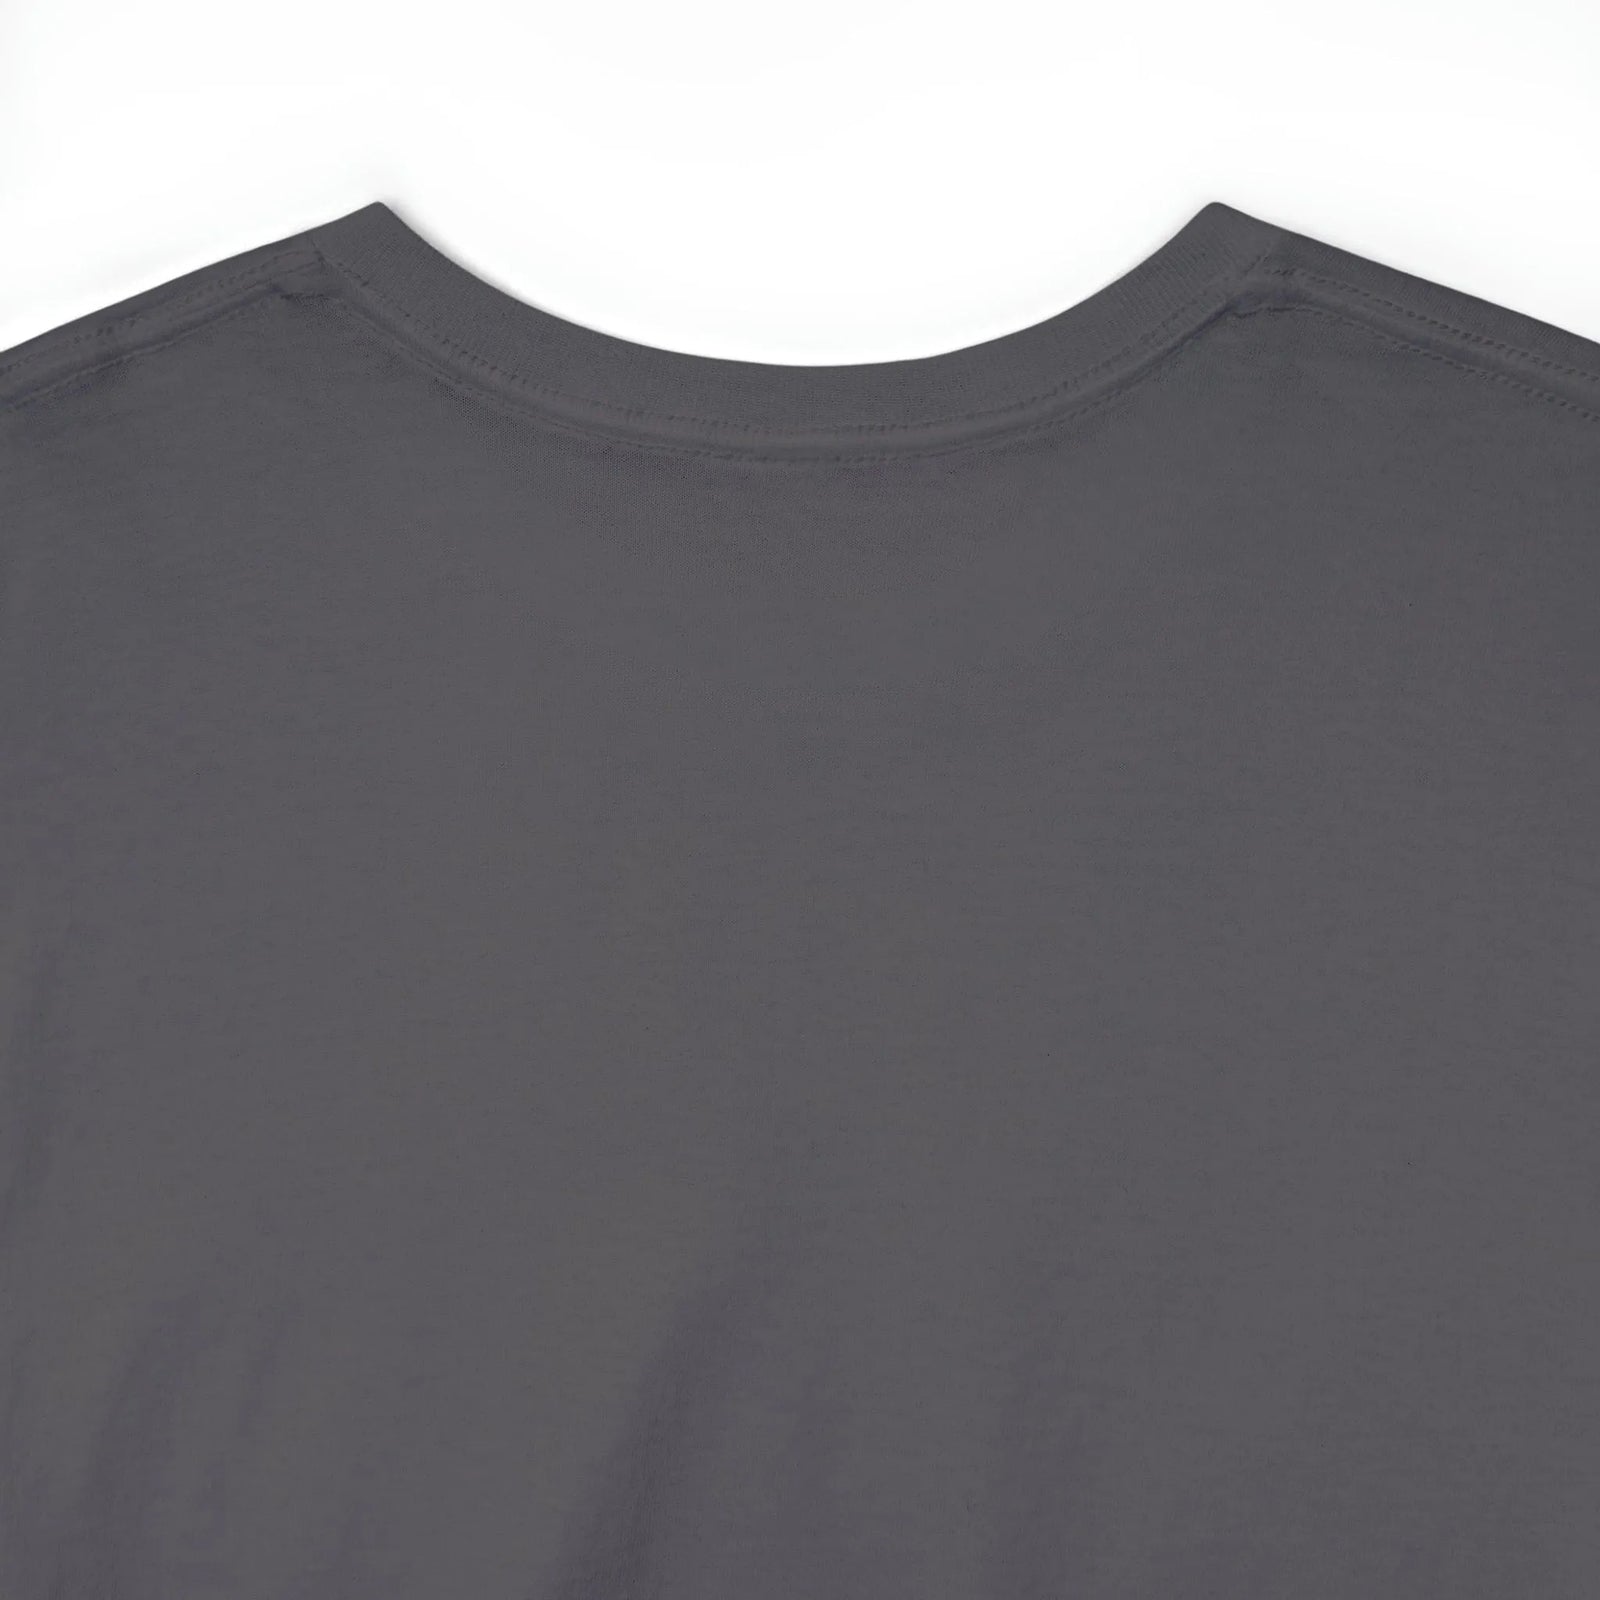 Doer's Assertion Uninterrupted T-Shirt Unisex Heavy Cotton Tee